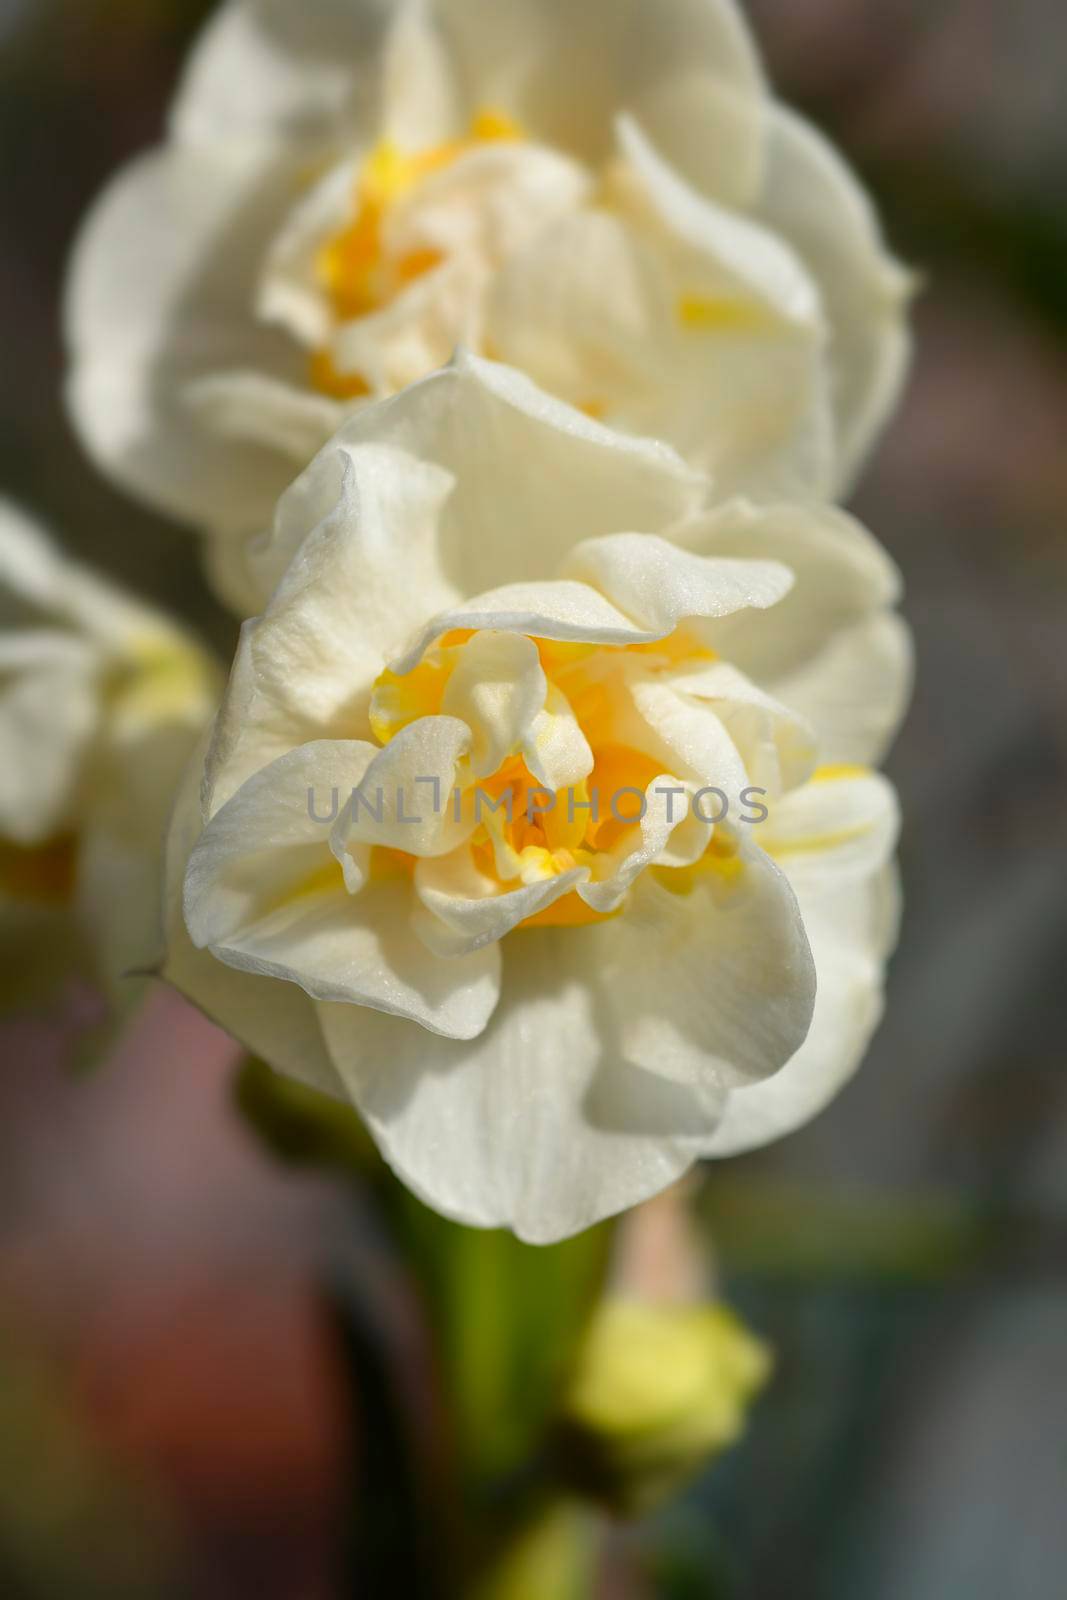 Daffodil Cheerfulness by nahhan